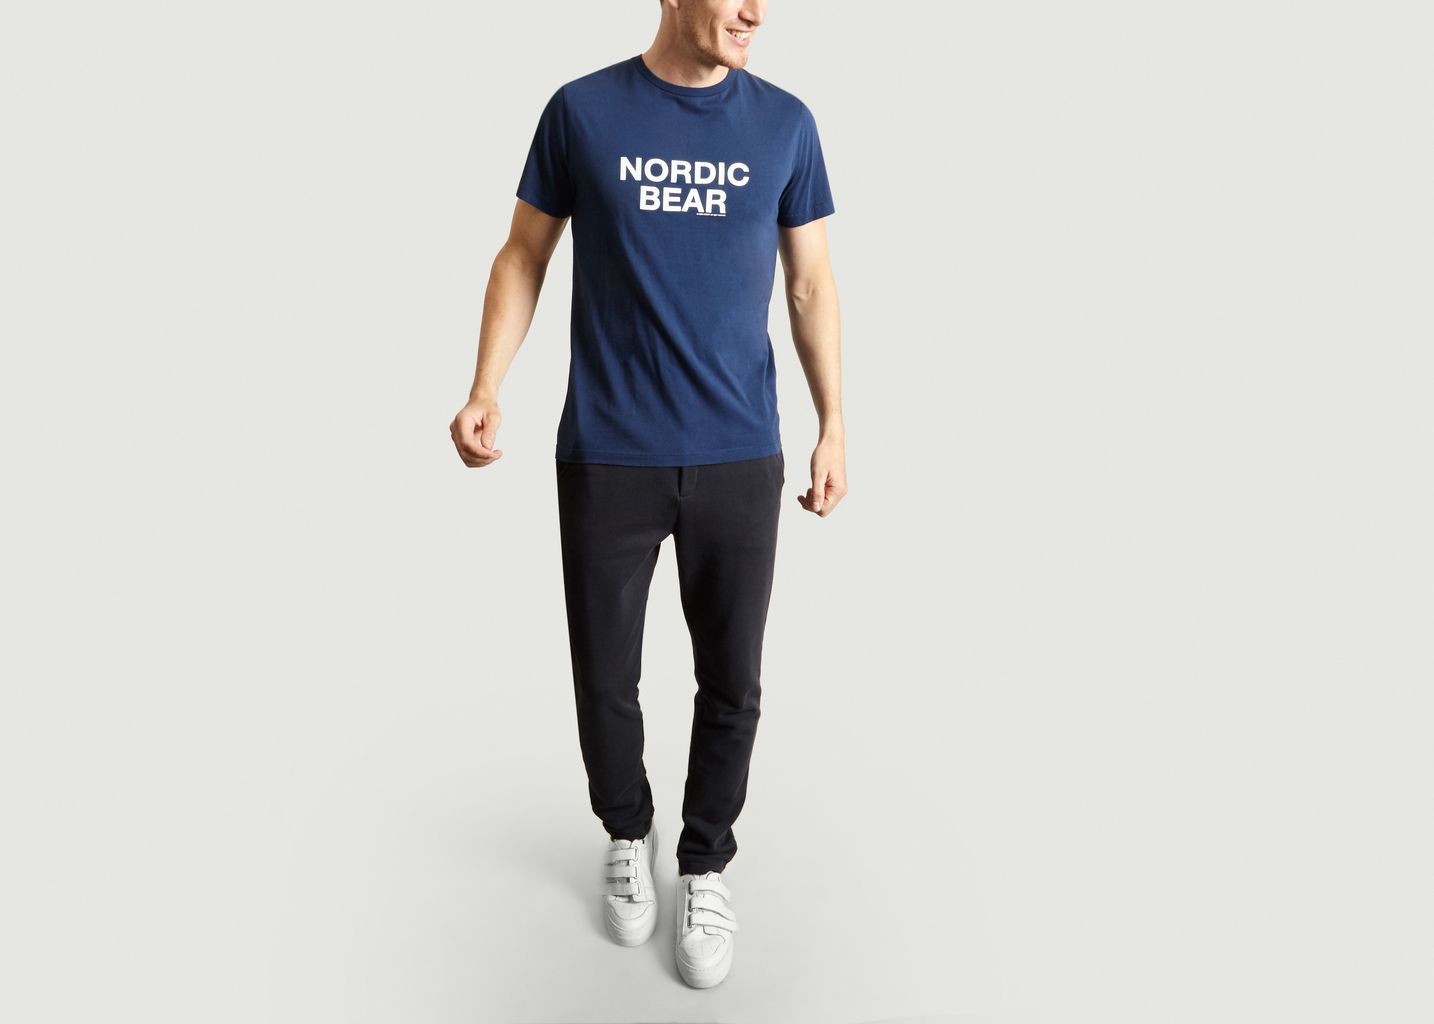 Nordic Bear T-shirt - Ron Dorff